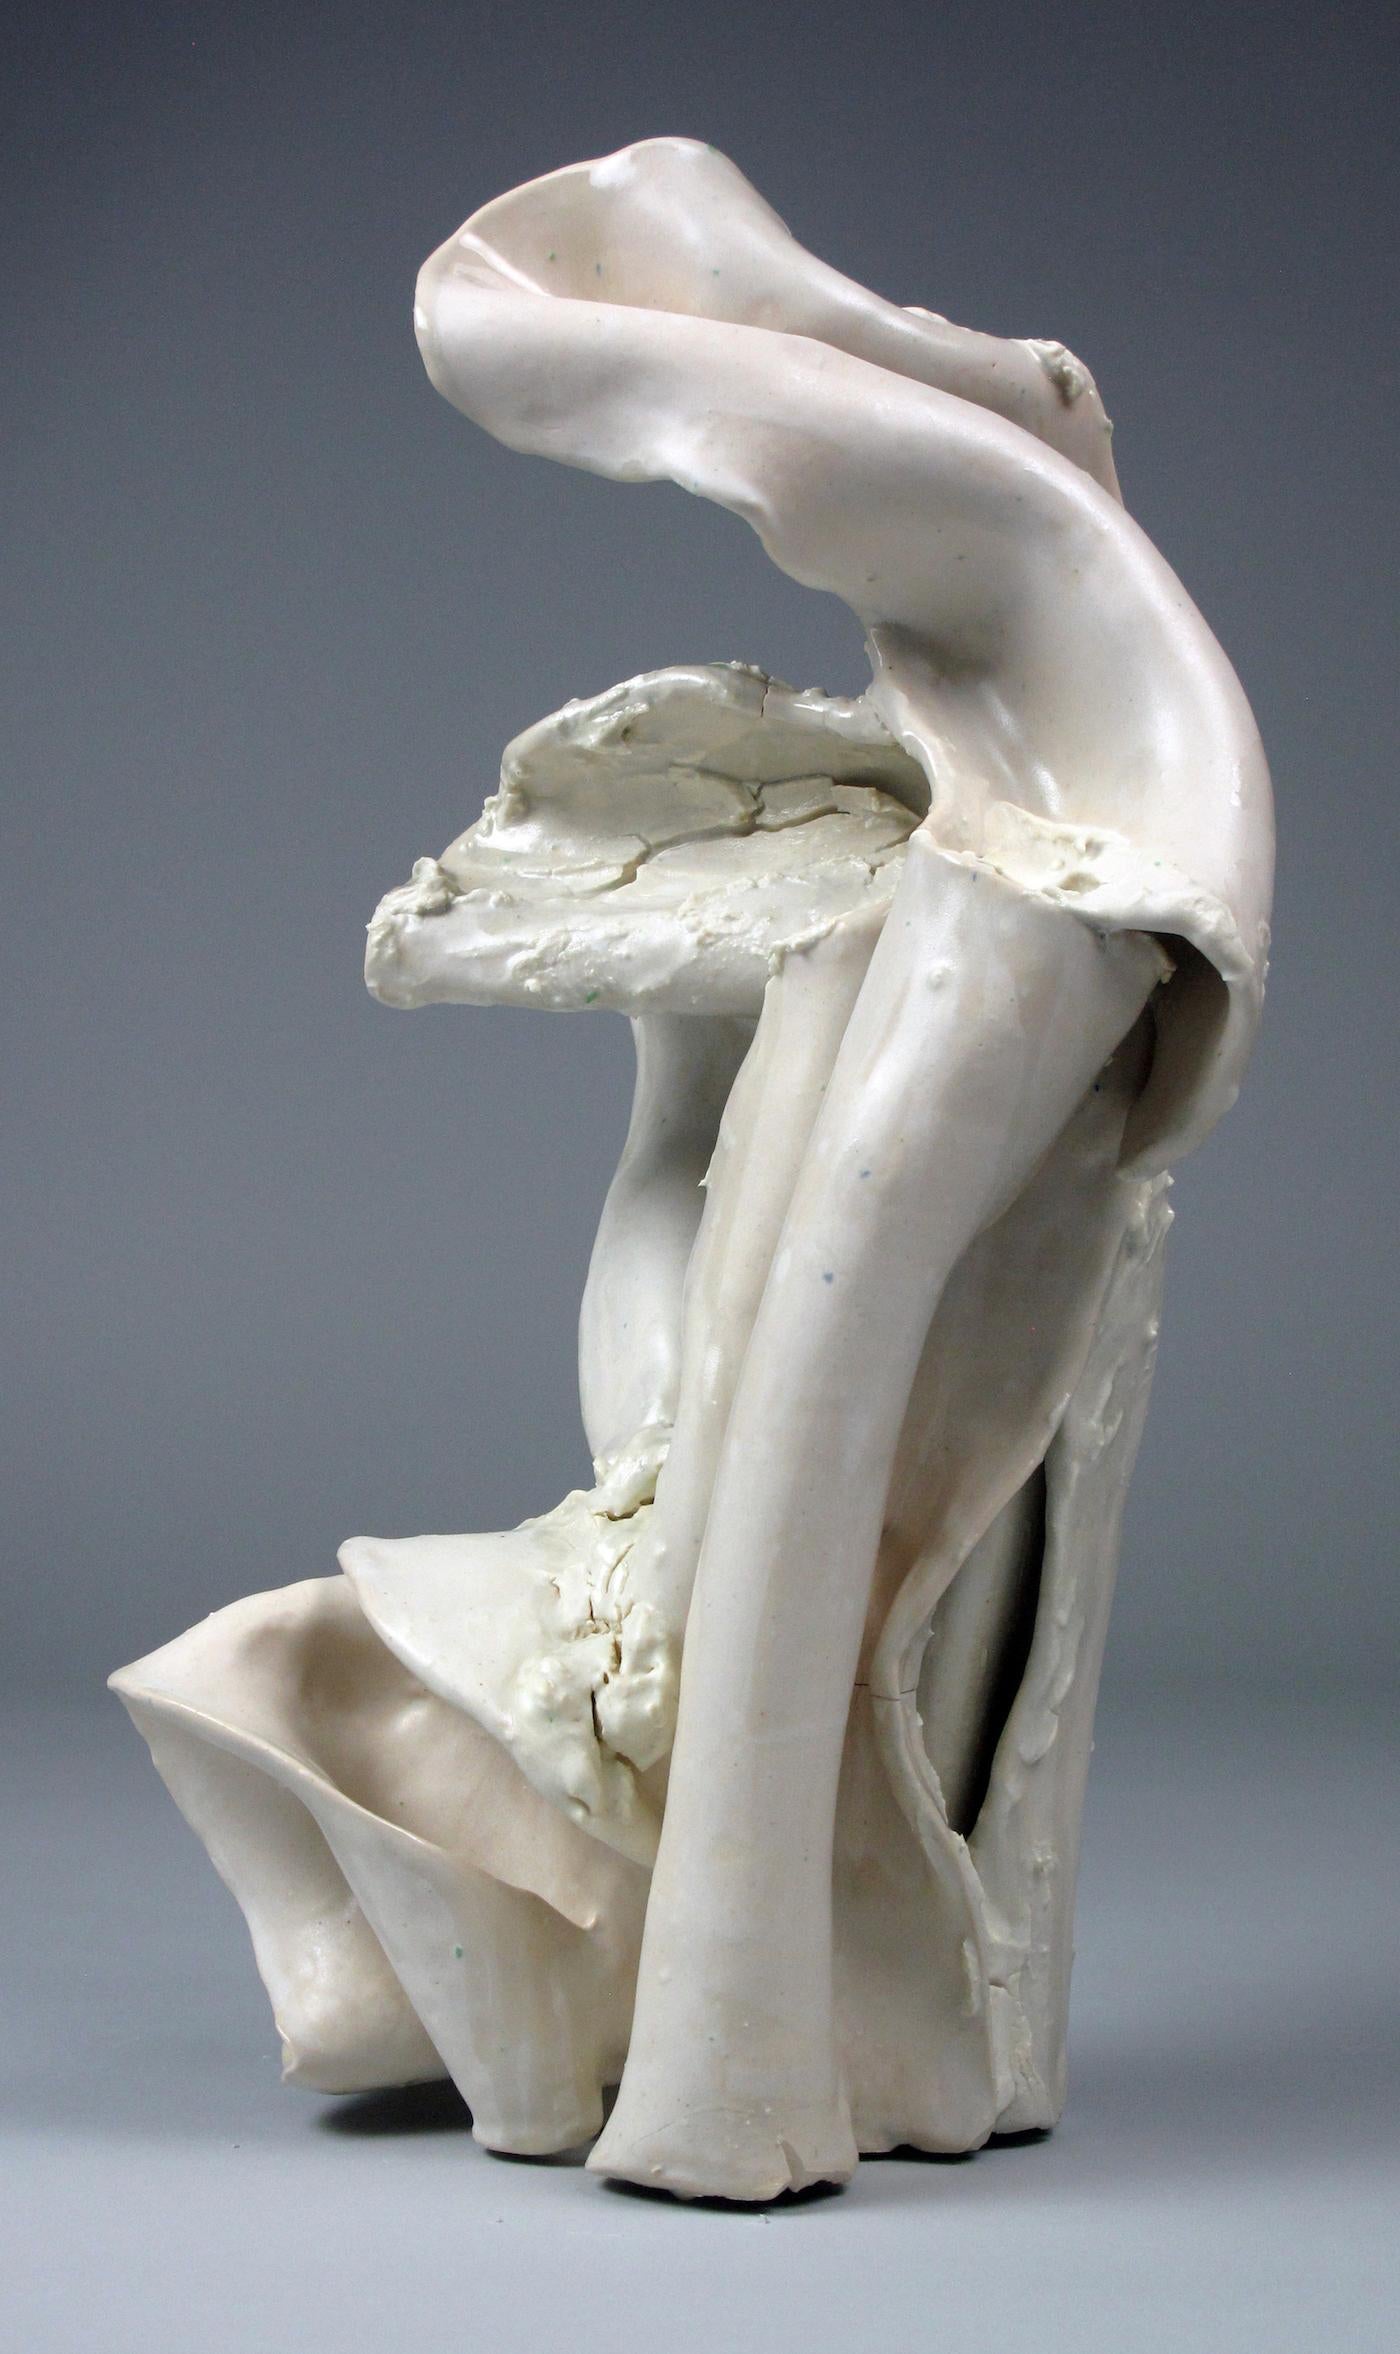 "Bend", gestural, ceramic, sculpture, white, cream, stoneware